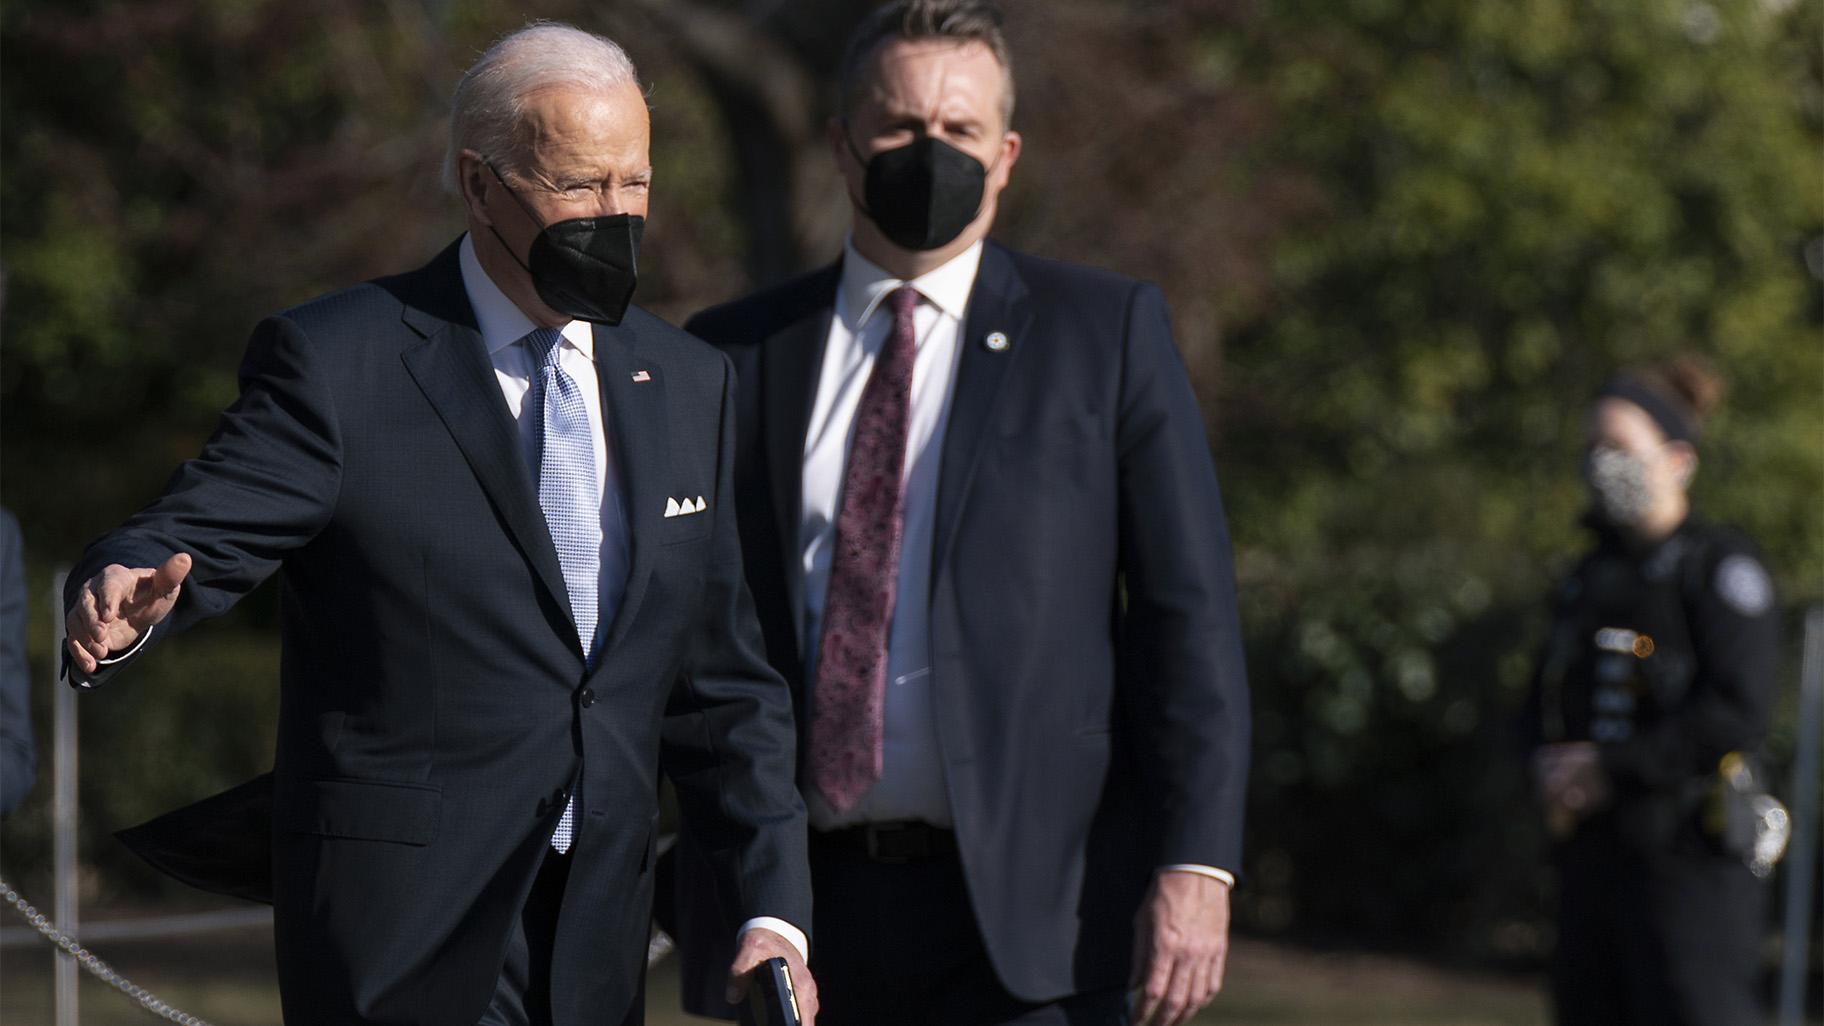 President Joe Biden walks to board Marine One on the South Lawn of the White House, Friday, Feb. 11, 2022, in Washington to travel to Camp David, Md. (AP Photo / Manuel Balce Ceneta)